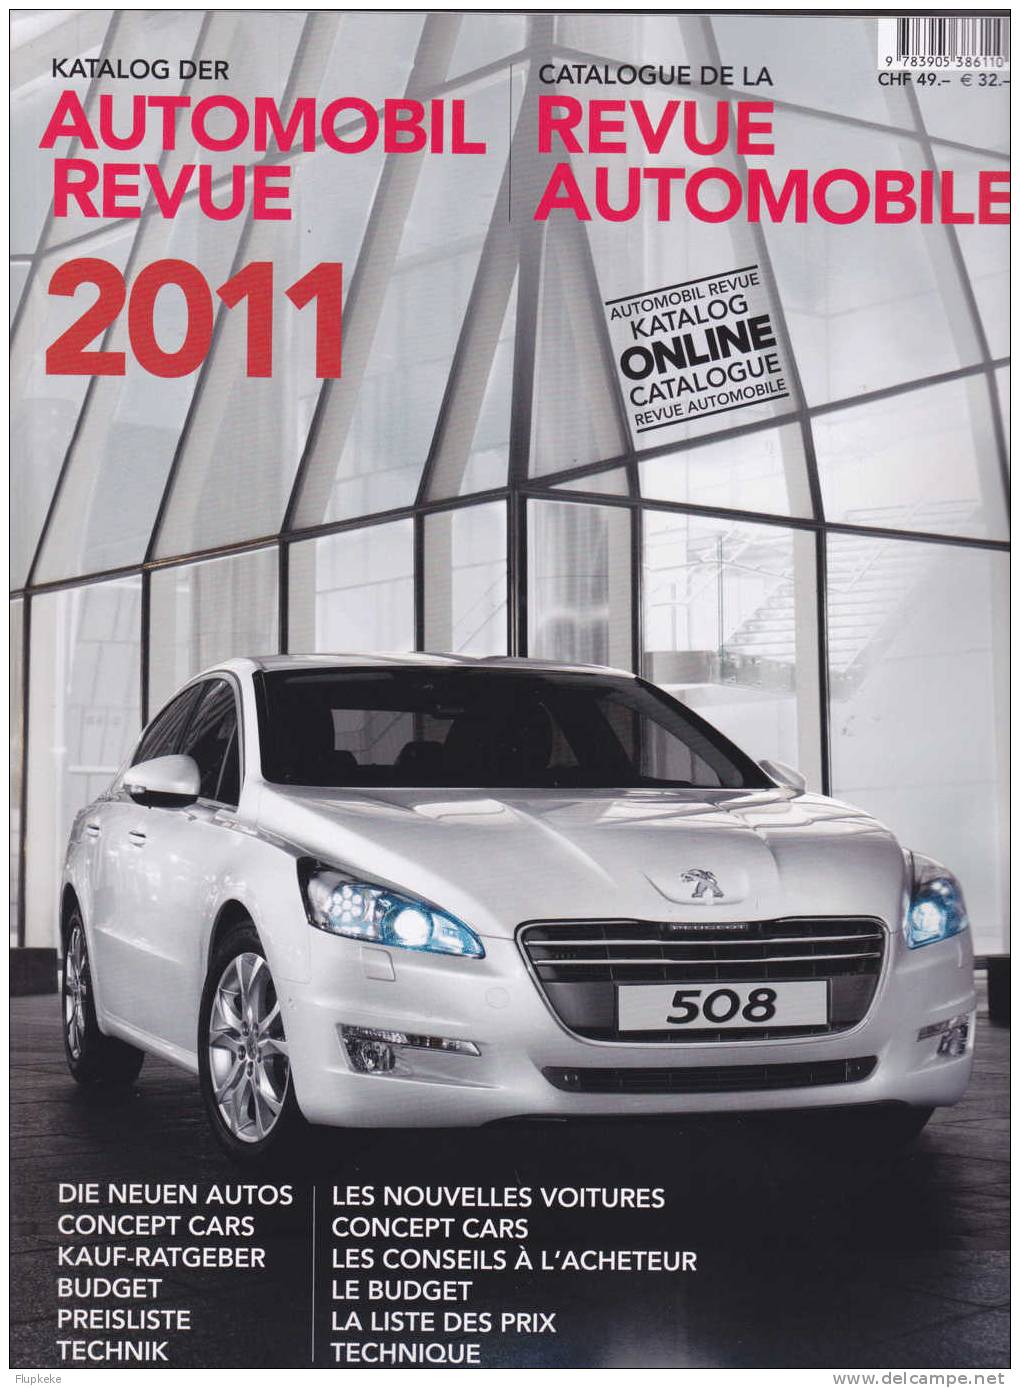 Catalogue De La Revue Automobile - Katalog Der Automobil Revue 2011 - Automóviles & Transporte